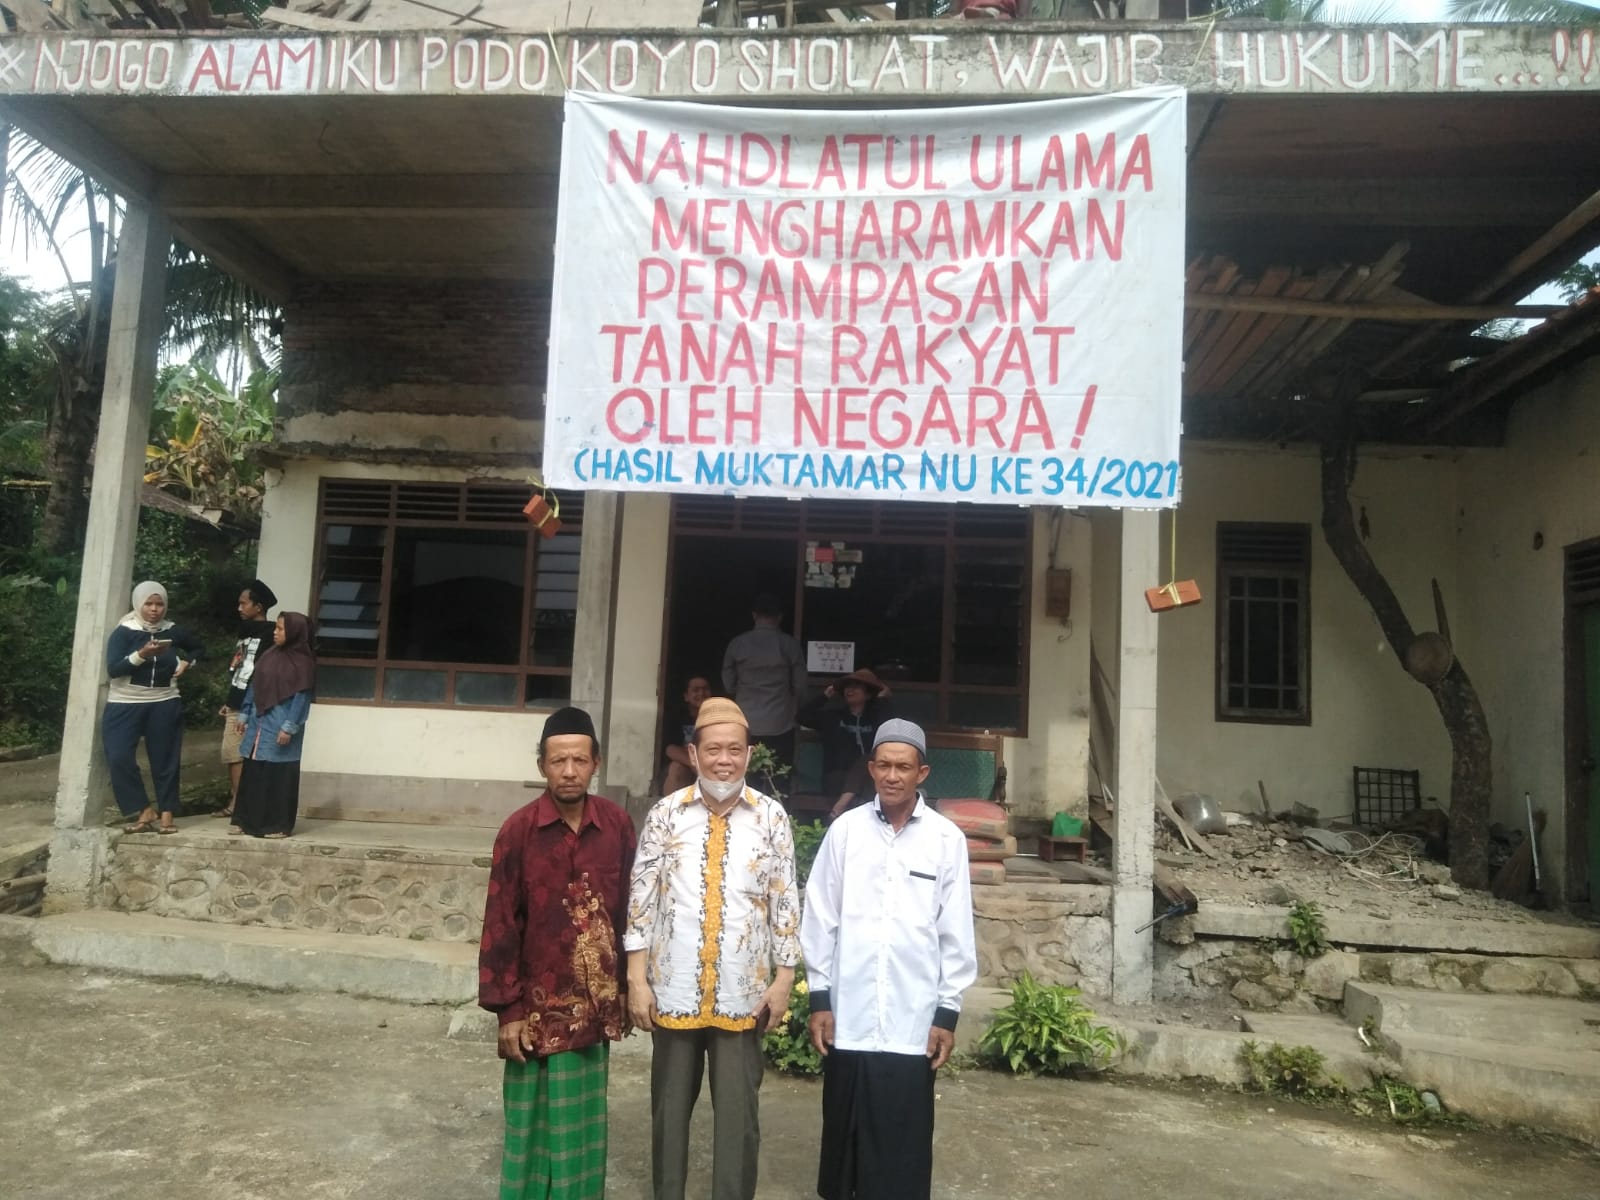 Selaras dengan Hasil Muktamar NU ke-34 Lampung, Tokoh PBNU Bergantian Mengecam Kebrutalan Aparat Kepada Warga Wadas